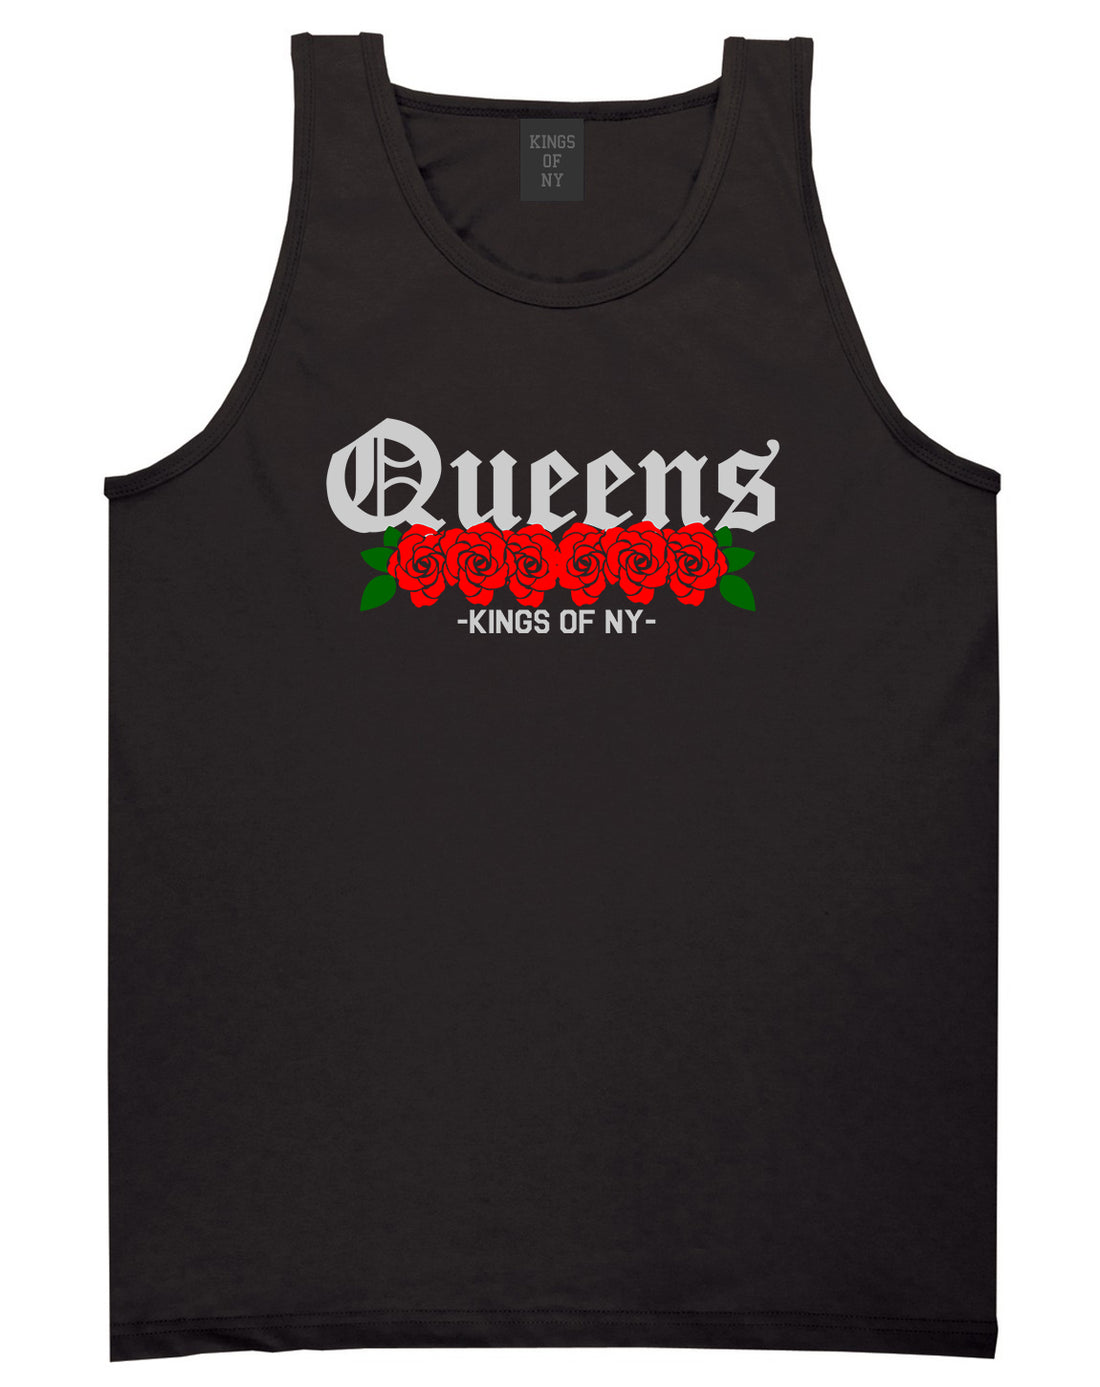 Queens Roses Kings Of NY Mens Tank Top T-Shirt Black